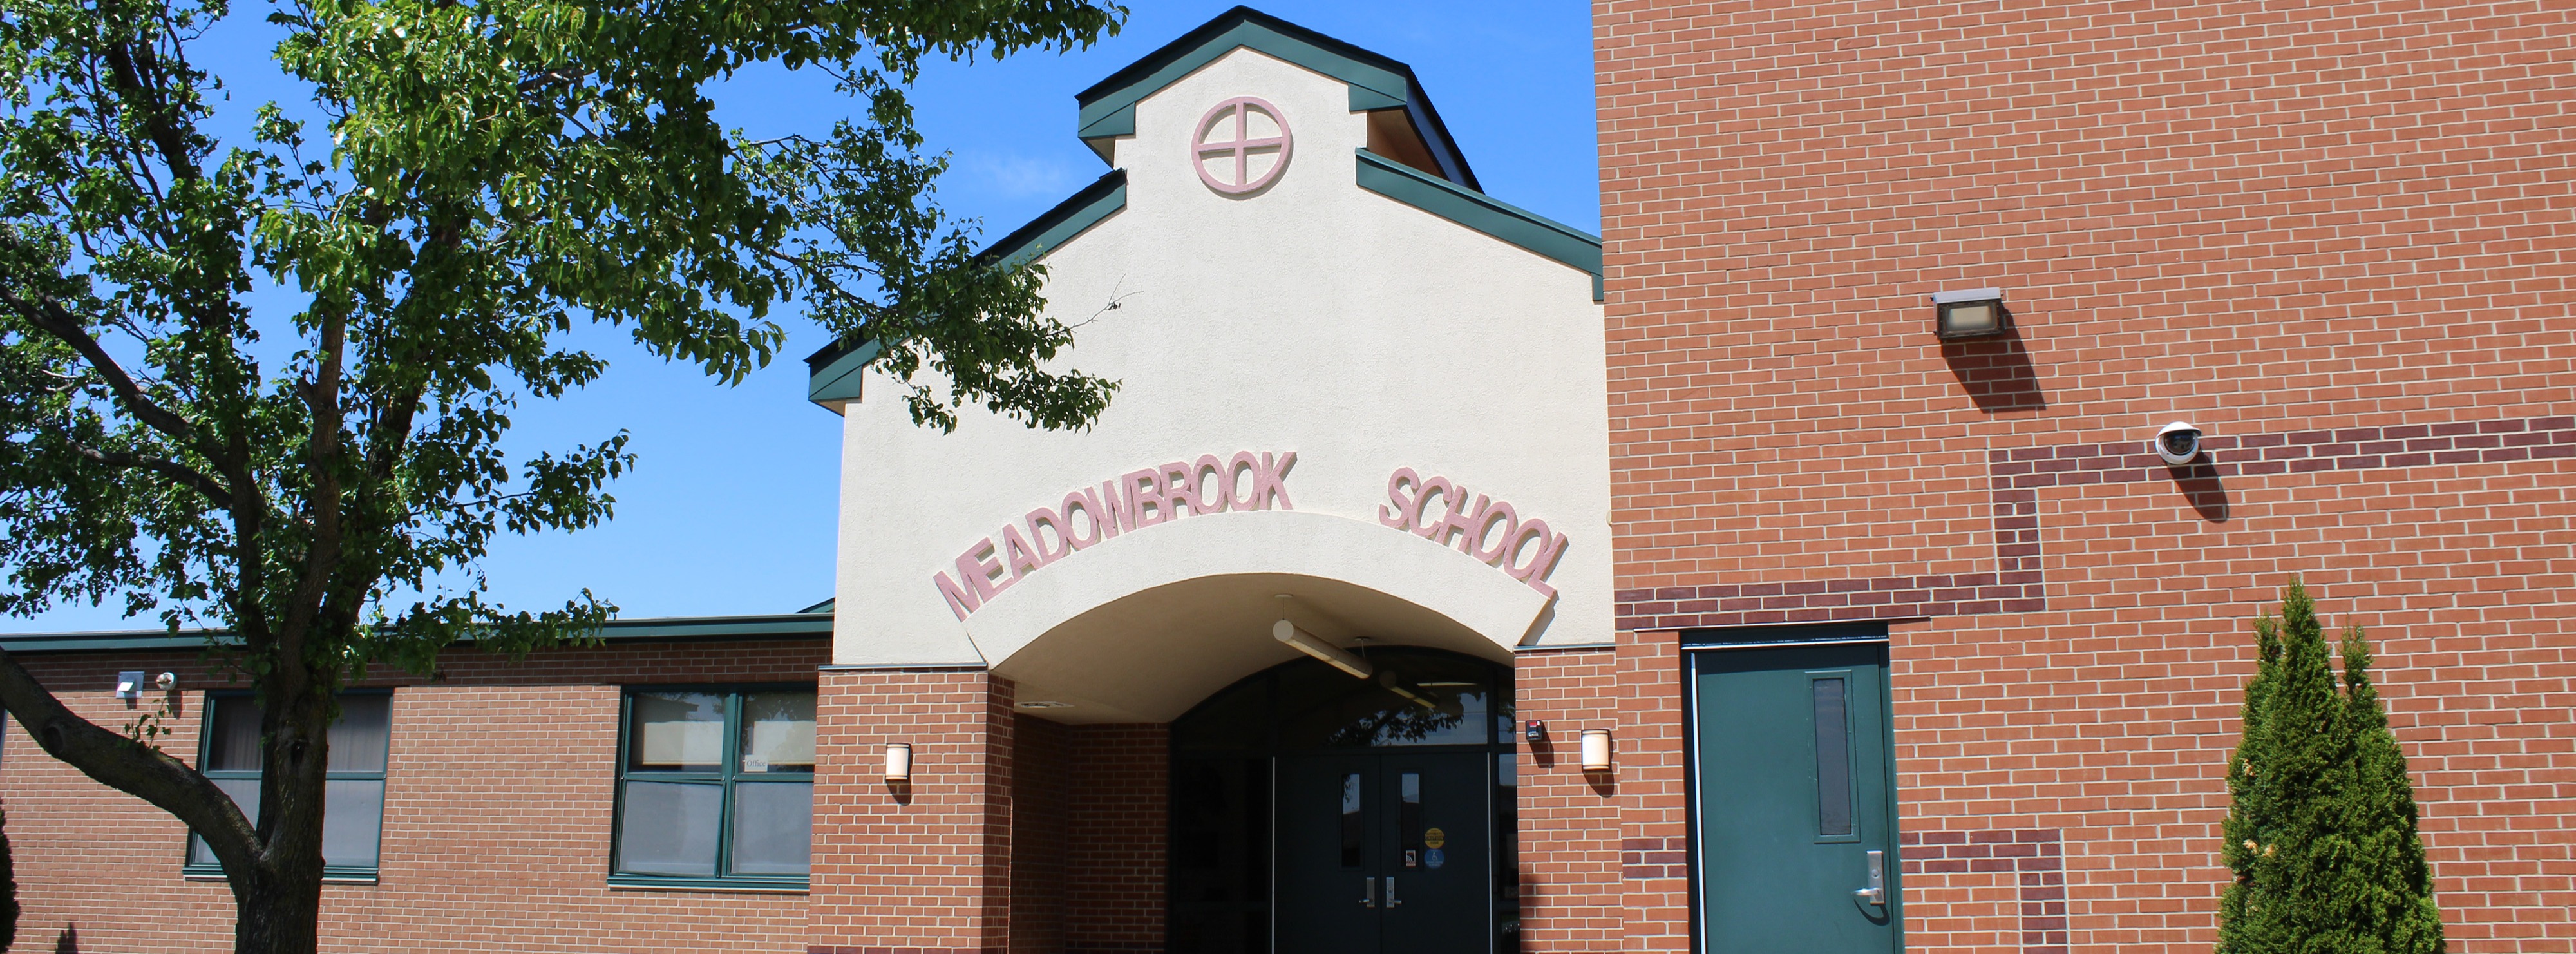 Meadowbrook School Building